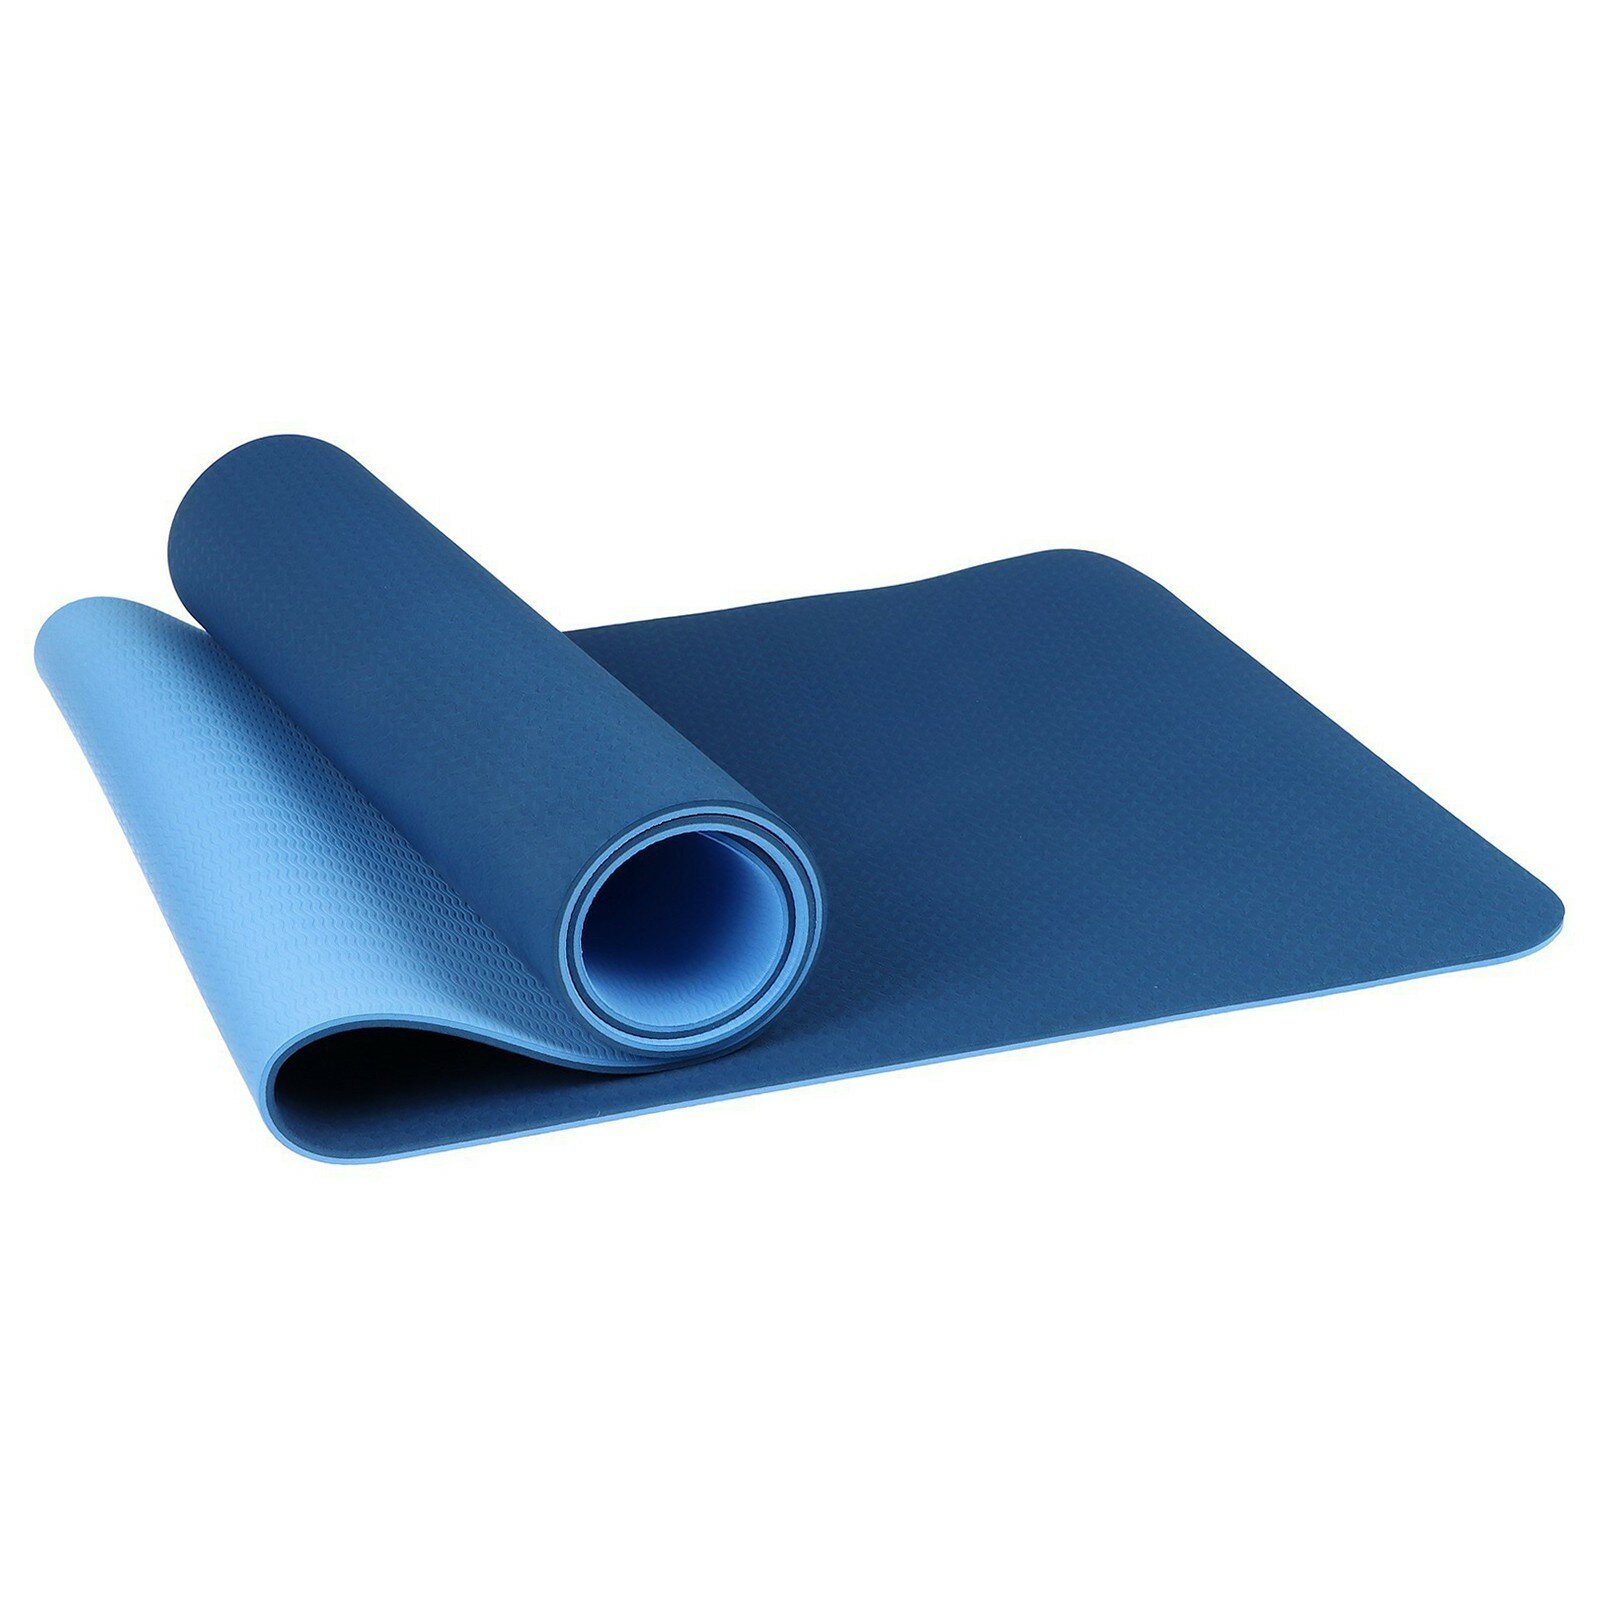 Коврик для йоги Sangh, 183×61×0,8 см, цвет синий